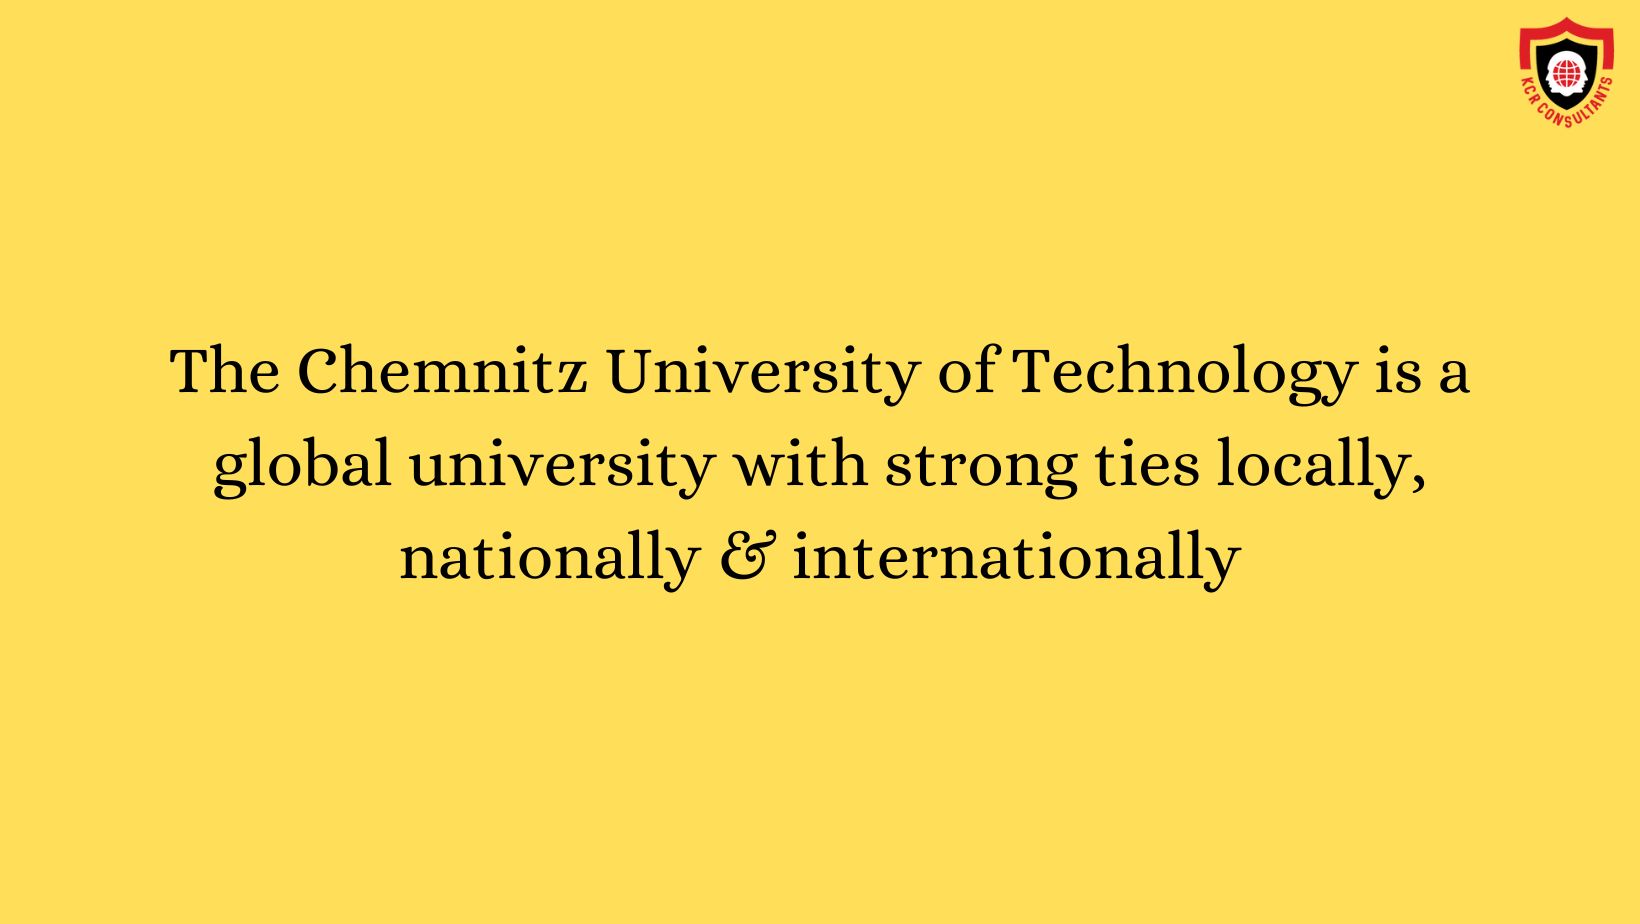 Chemnitz University of Technology - KCR CONSULTANTS - Introduction